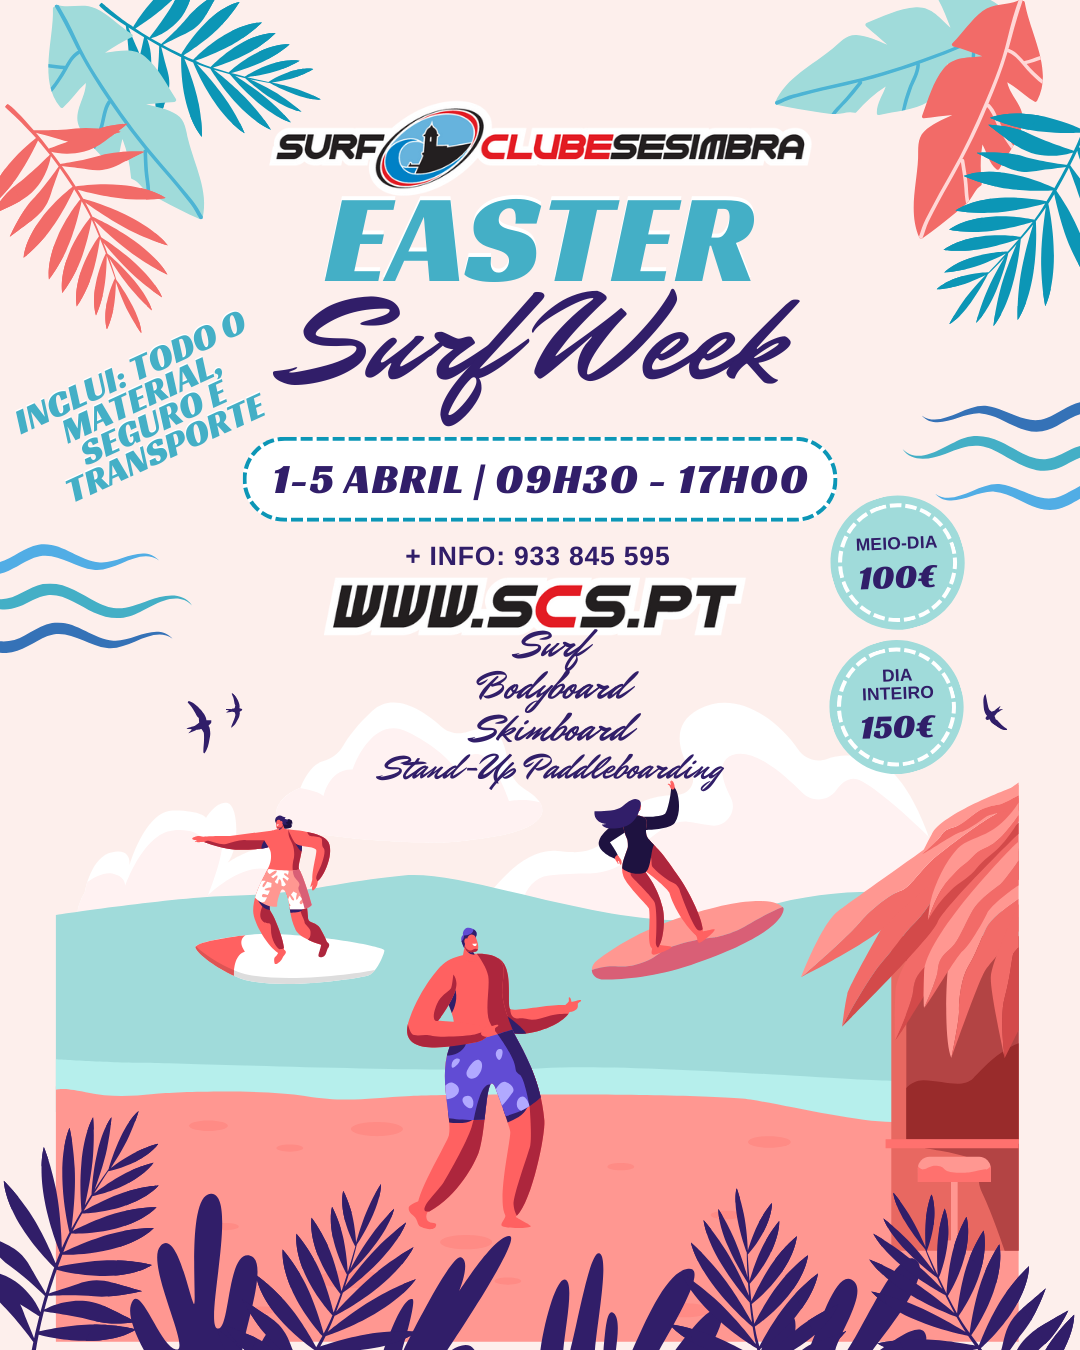 Easter Surf Week nas Praias de Sesimbra